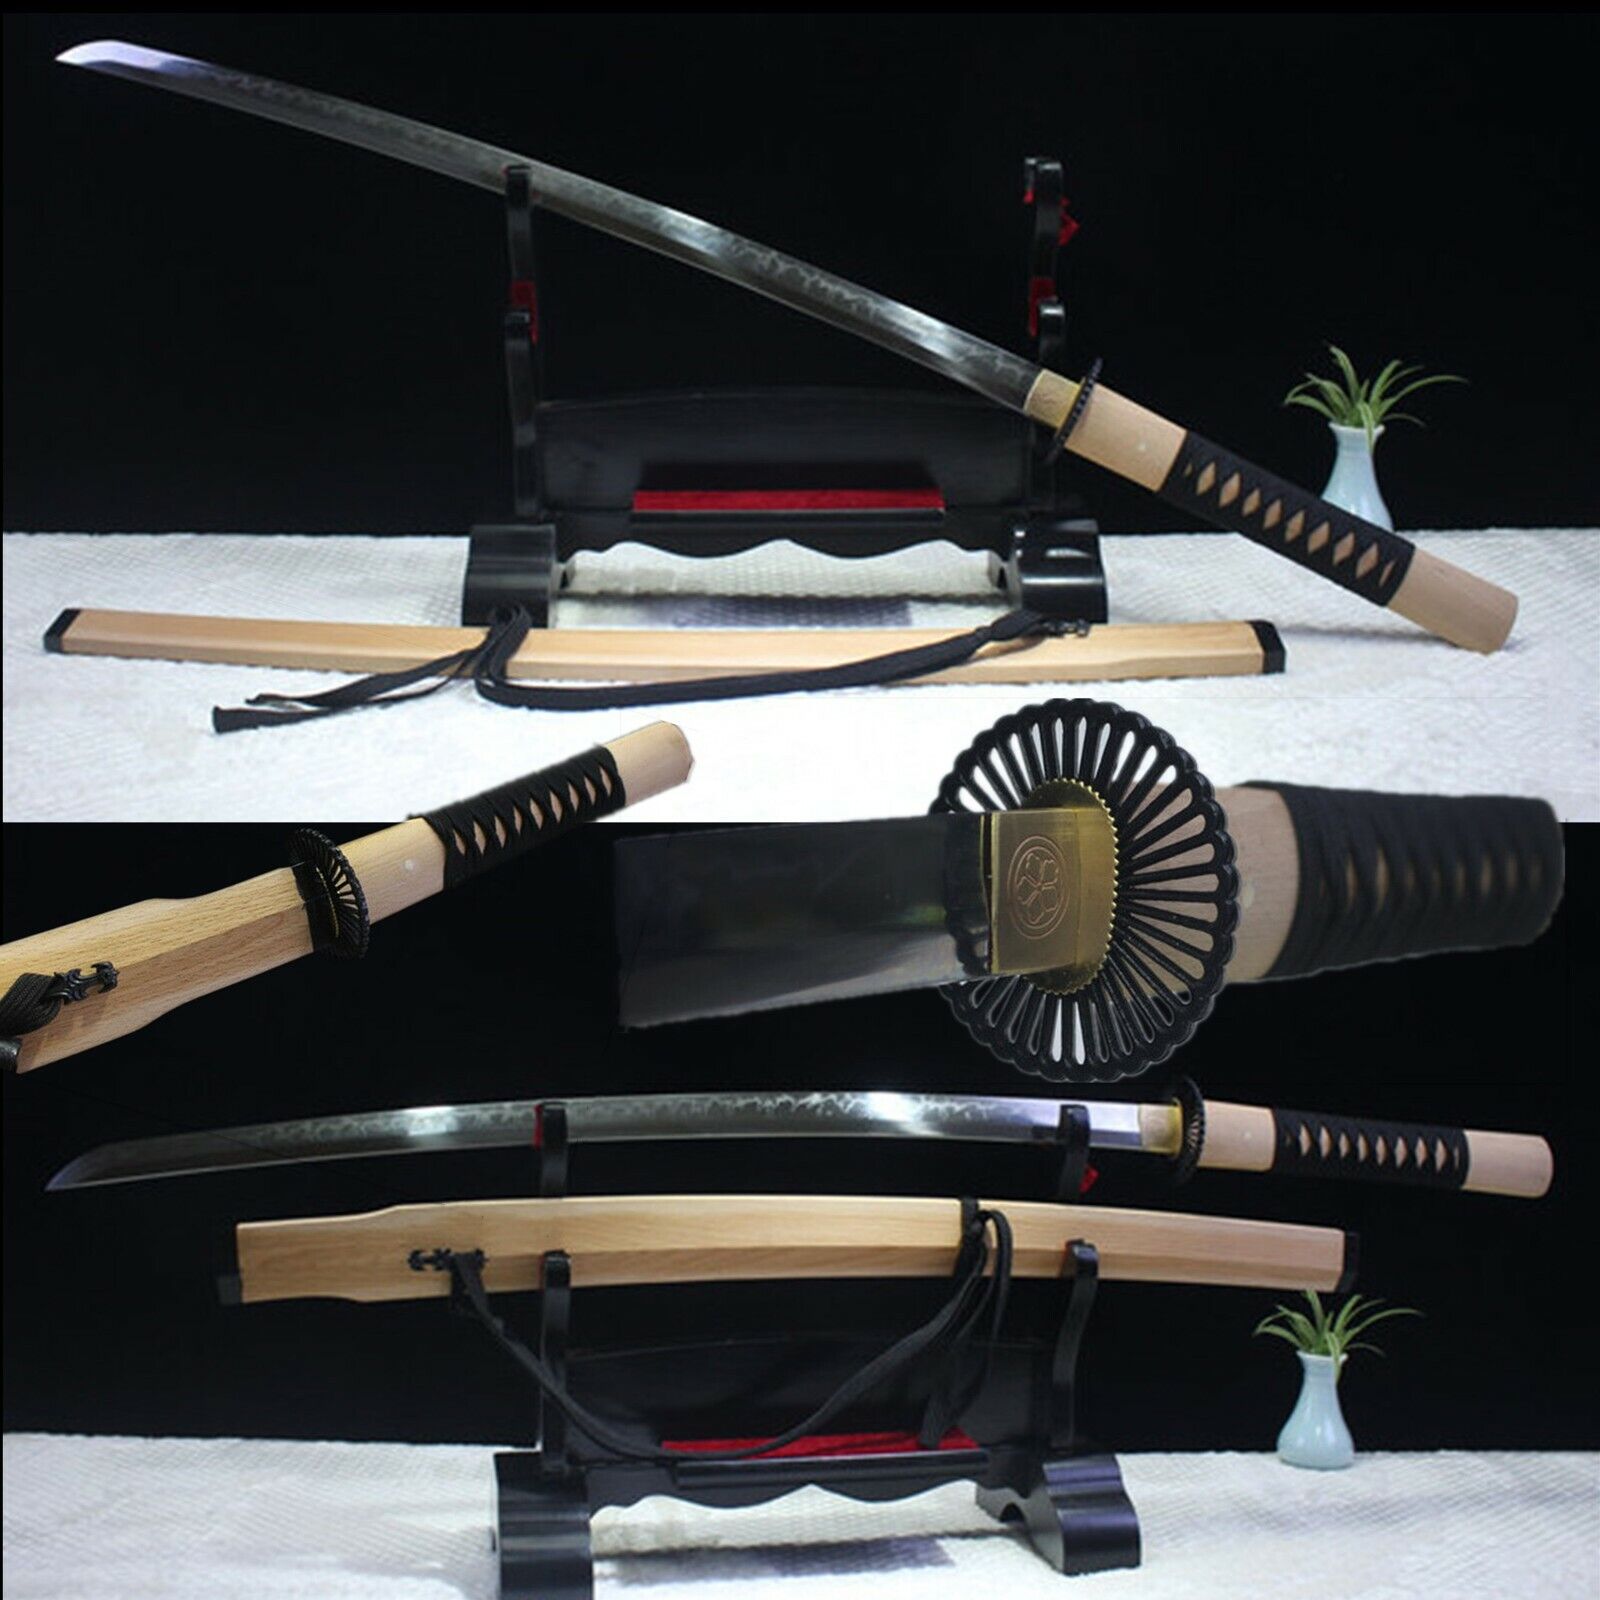  HANDMADE REAL HAMON JAPANESE SWORD CLAY TEMPER T10 STEEL BLADE SHARP